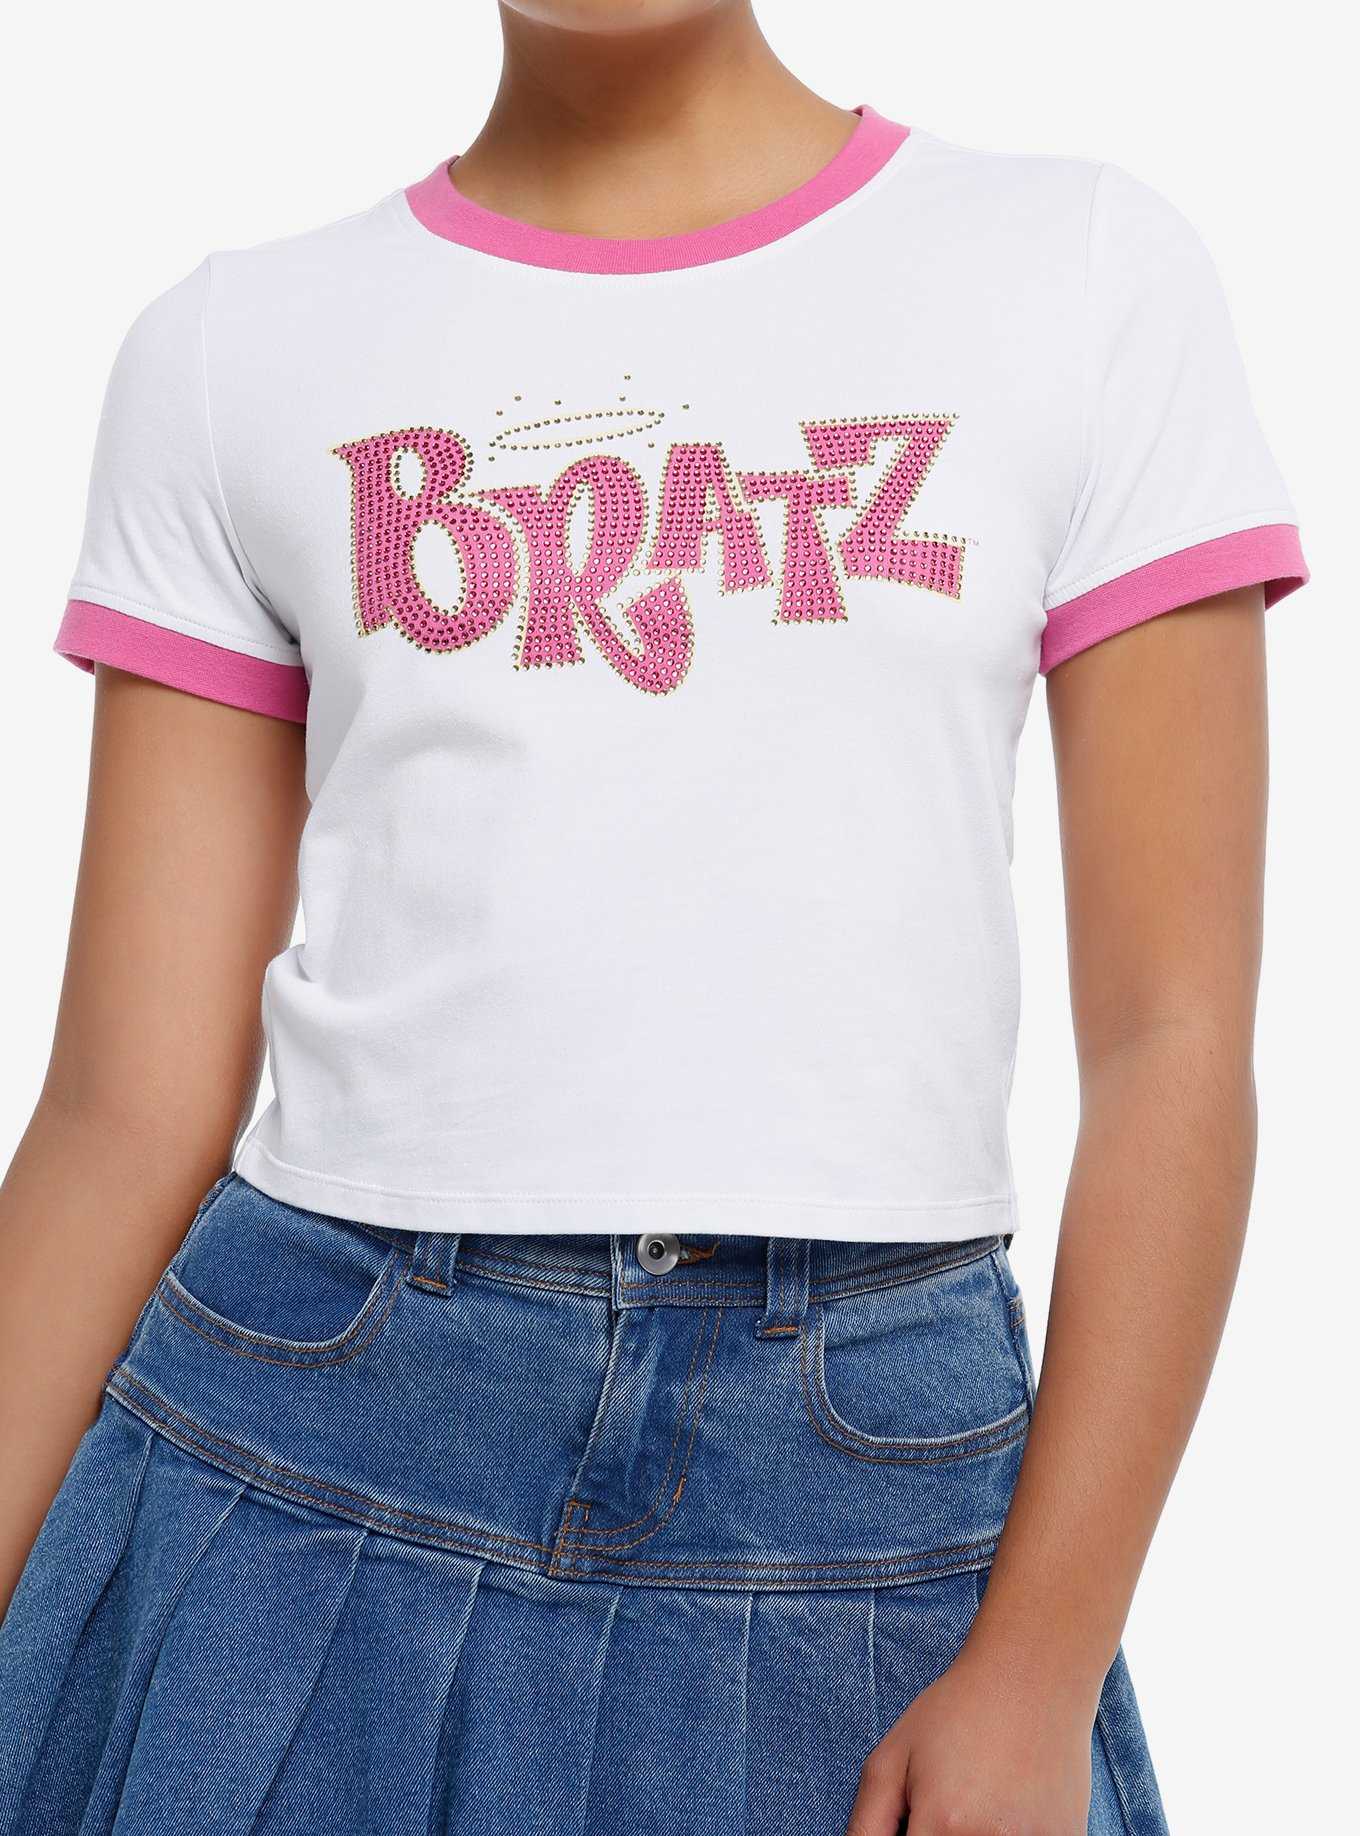 Bratz Circus Fortune Teller Gypsy Doll | Graphic T-Shirt